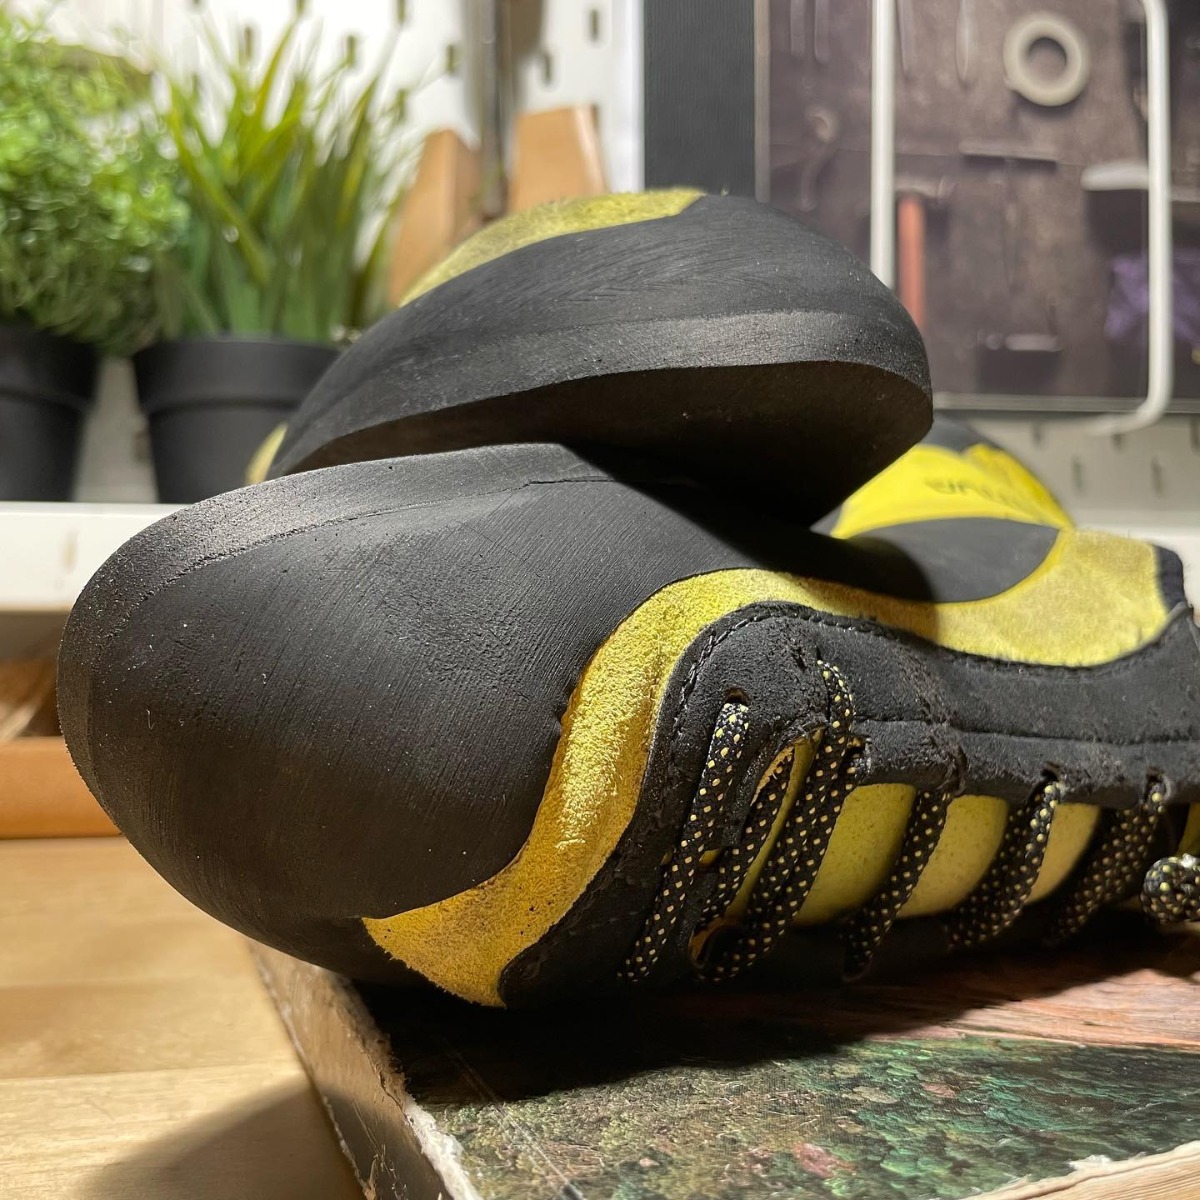 Glue line on a resoled climbing shoe